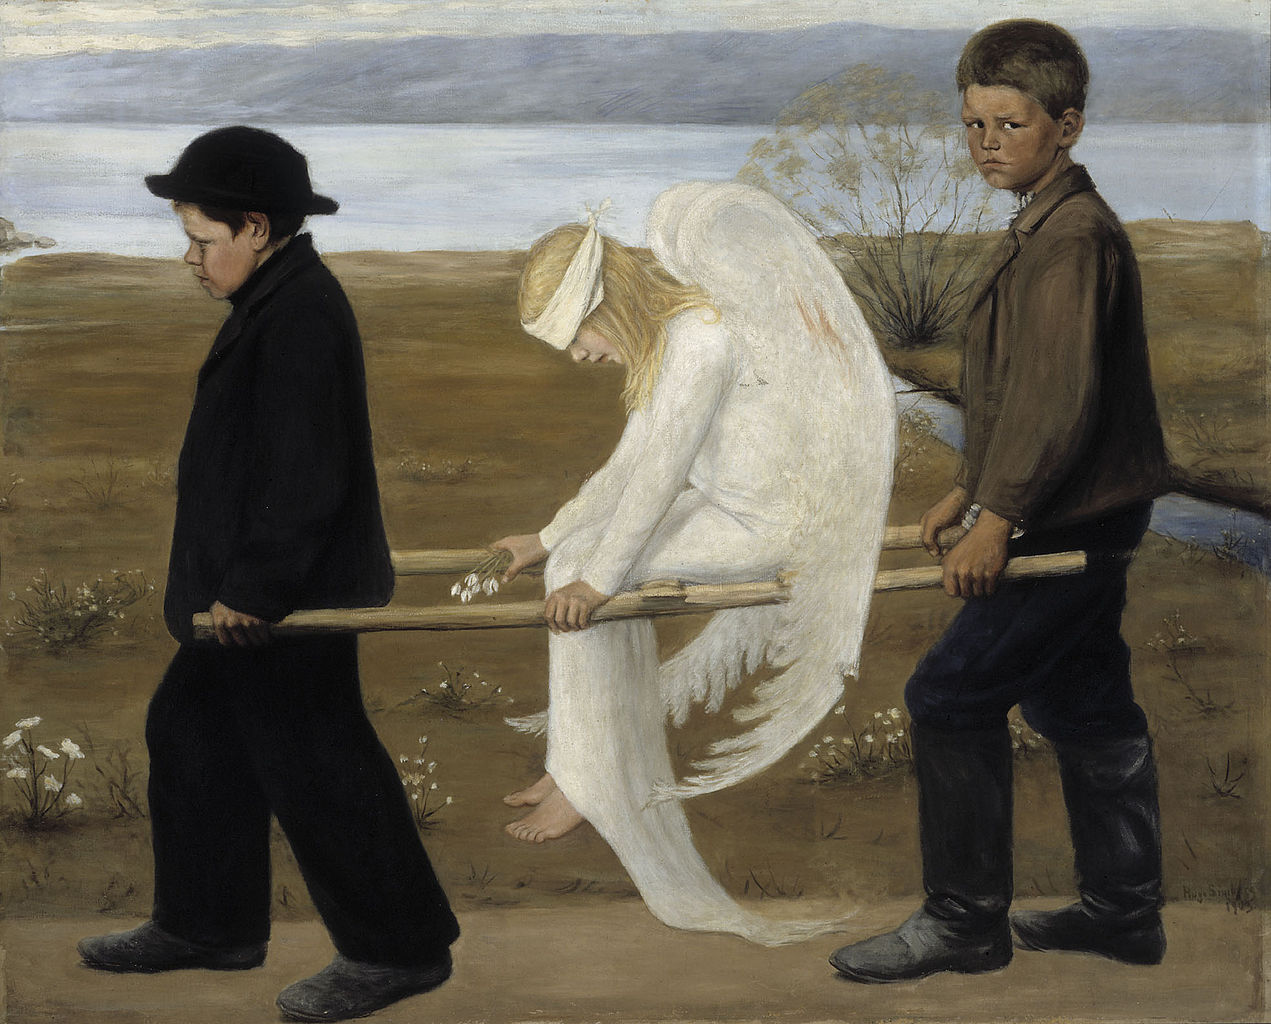 受傷的天使 by Hugo Simberg - 1903 - 127 x 154 cm 